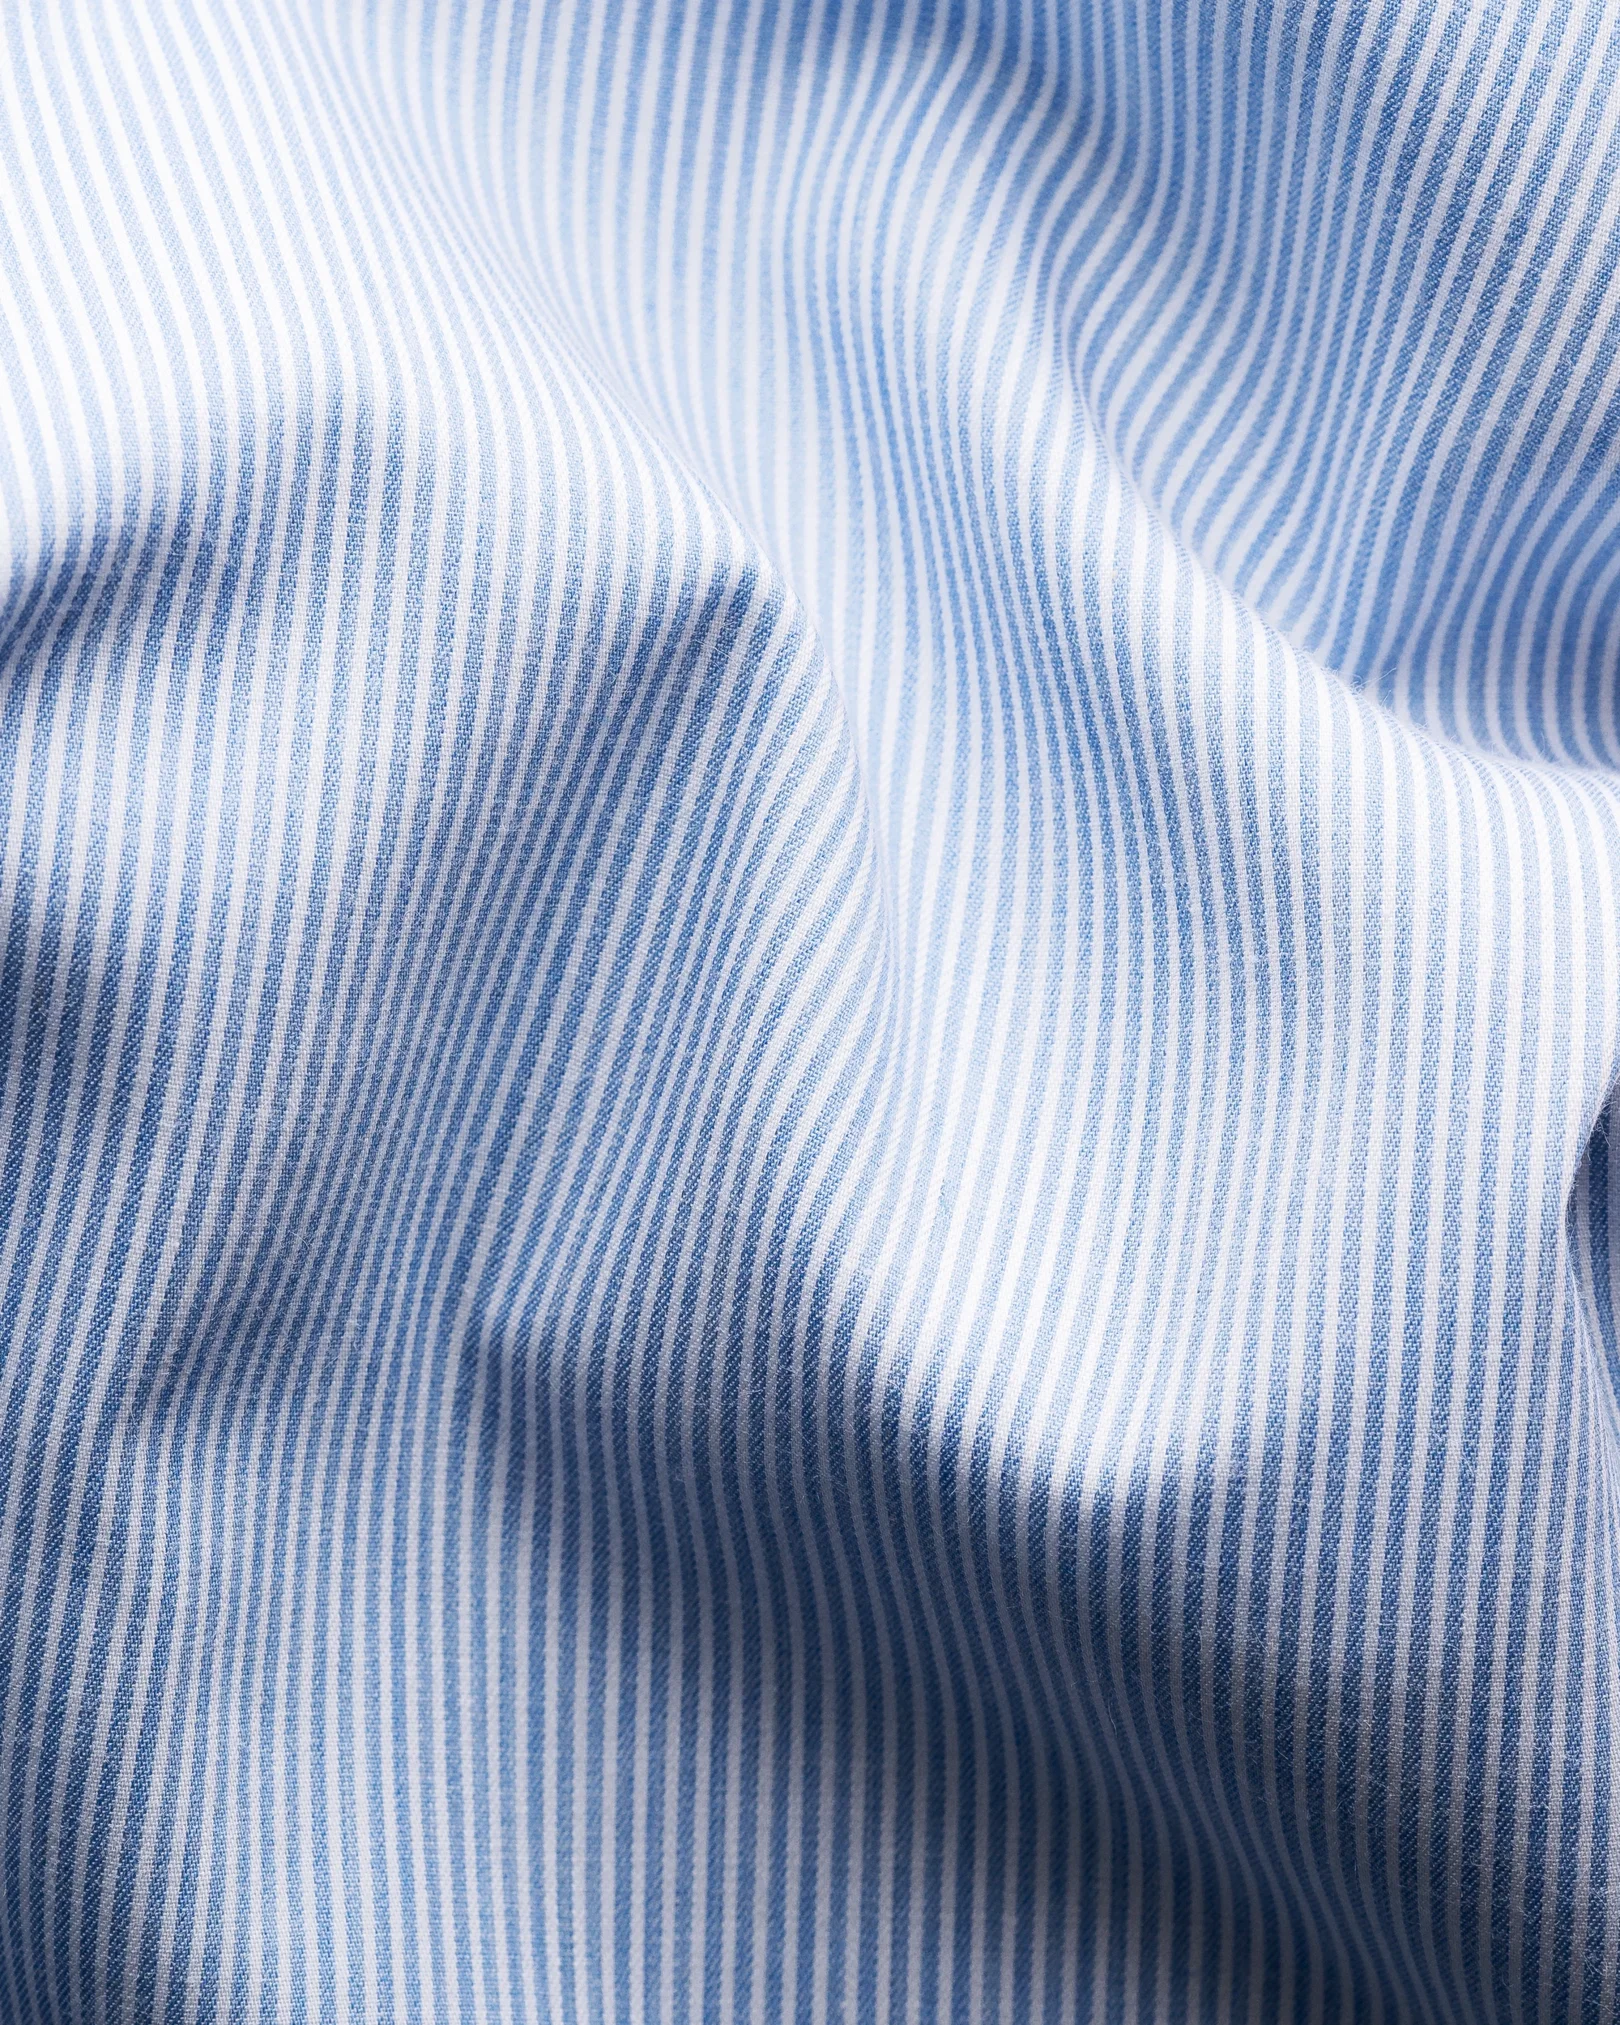 Eton - striped fine twill shirt